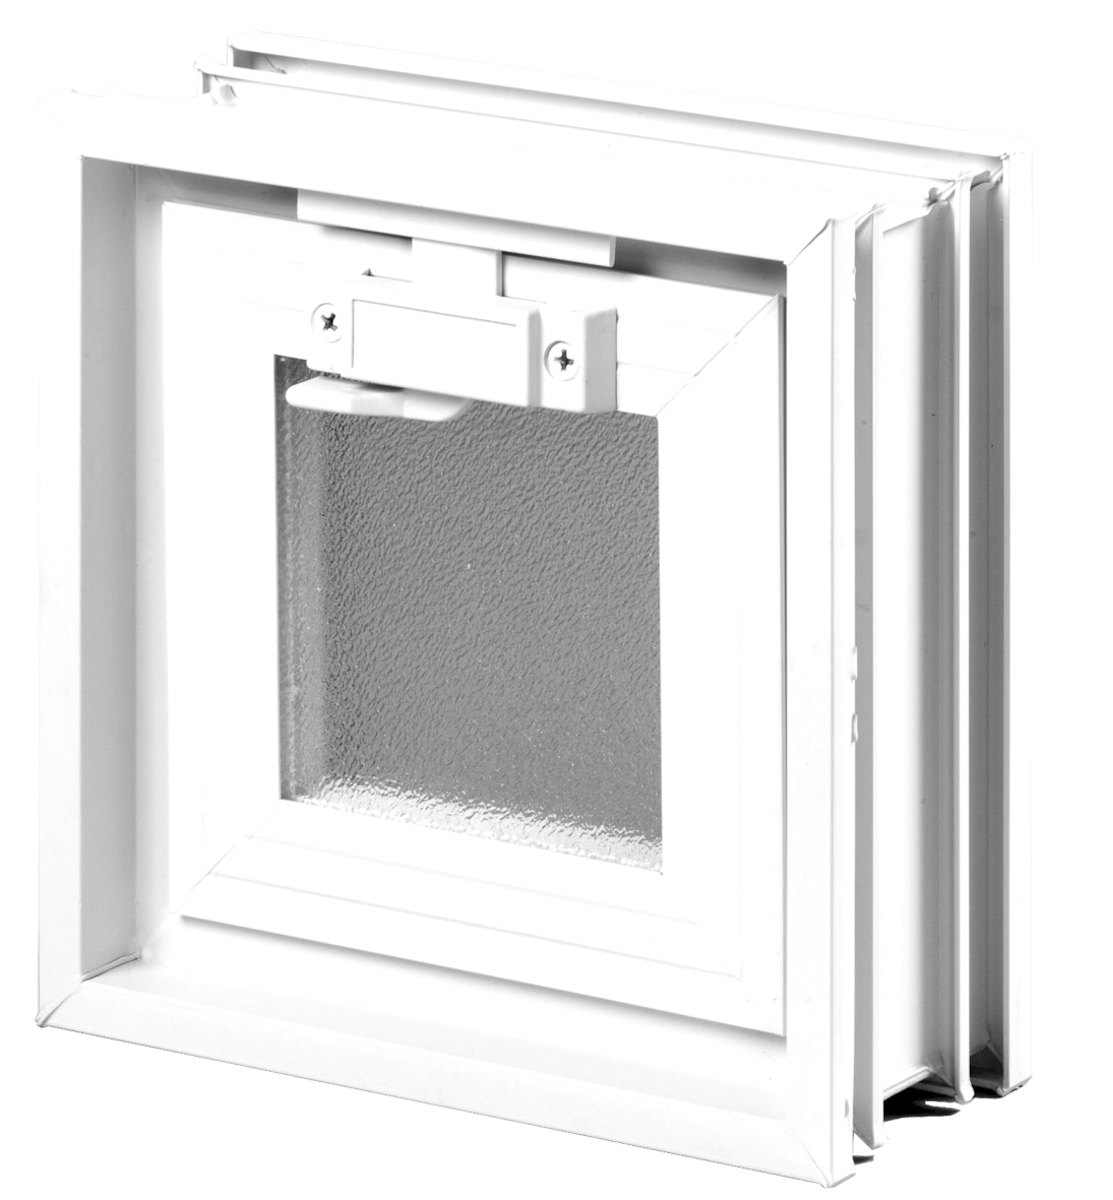 Větrací okno Glassblocks bílá 19x19 cm plast GBMR1919 Glassblocks